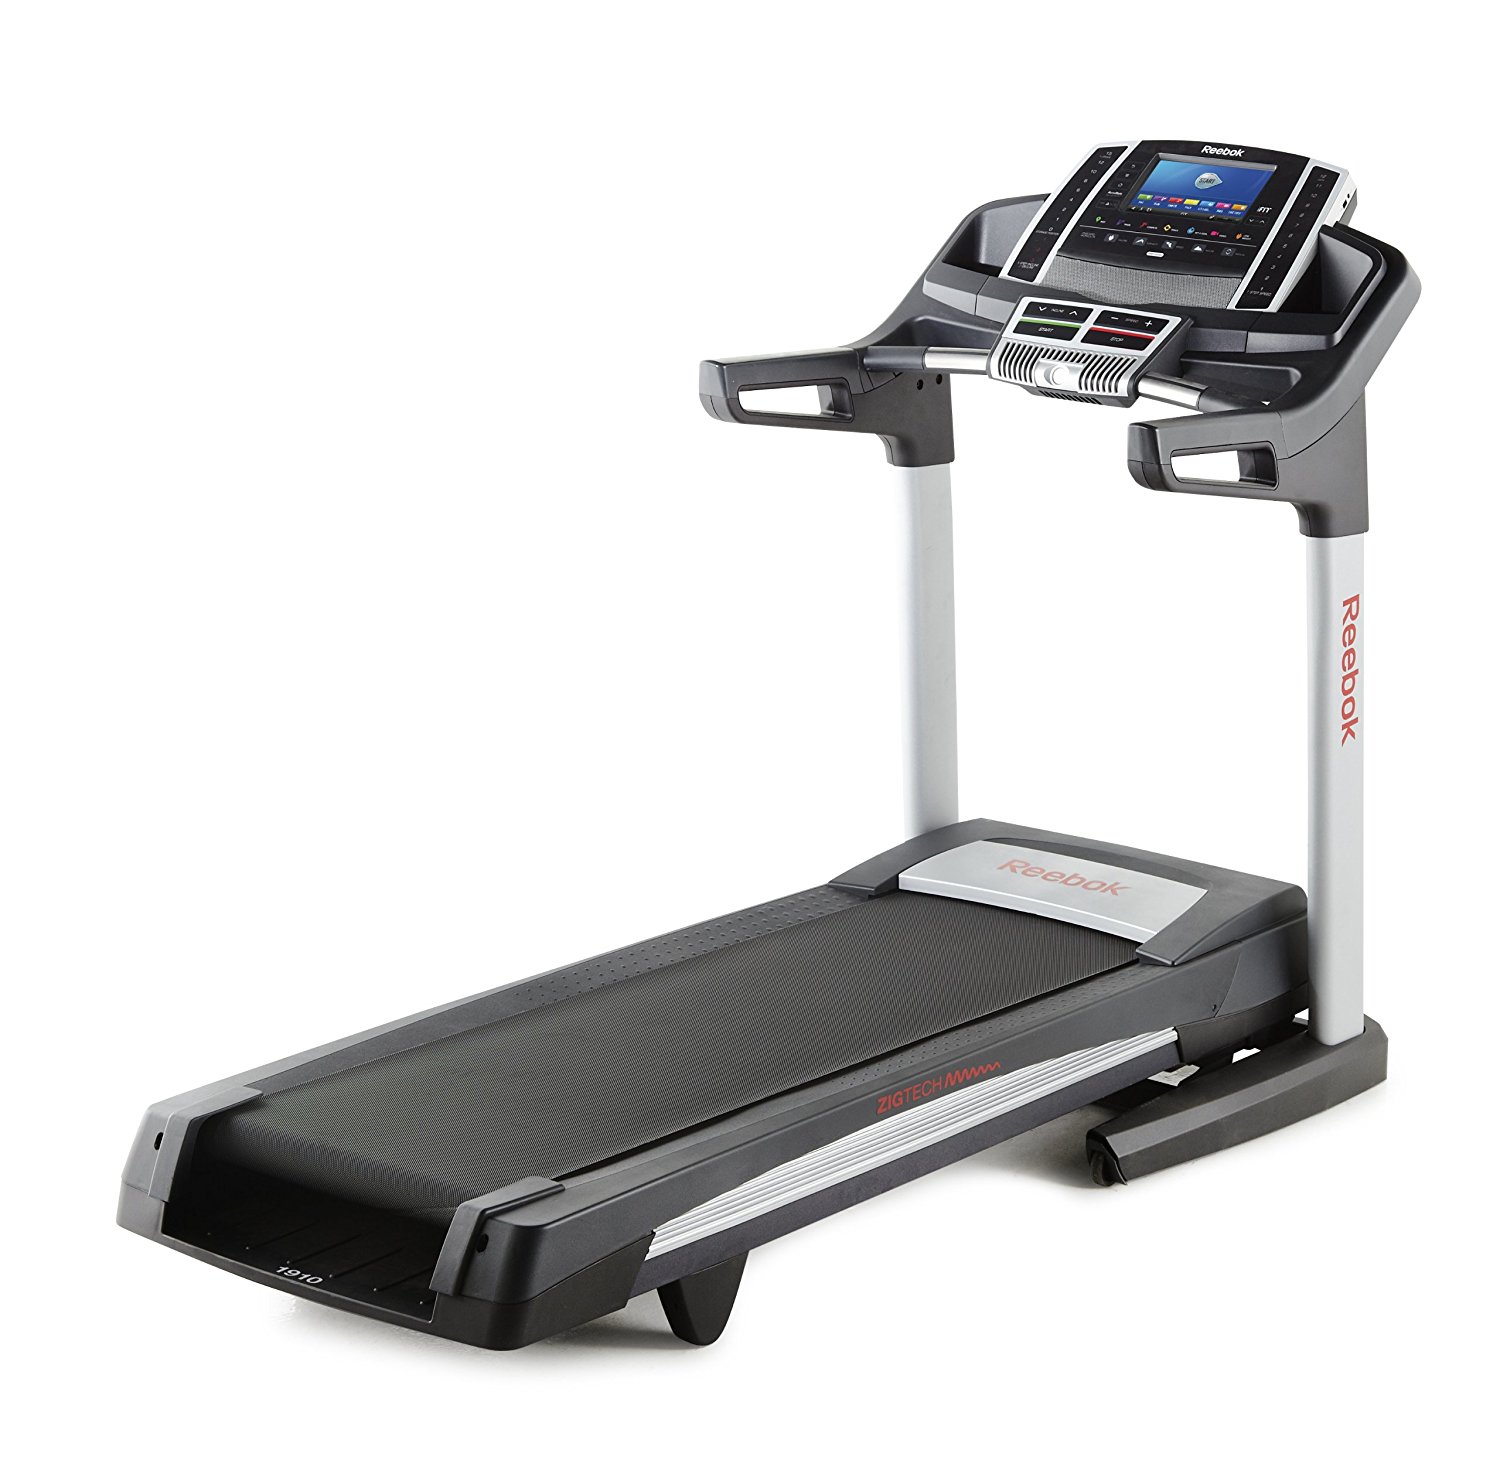 reebok 9500 es treadmill weight - 53 